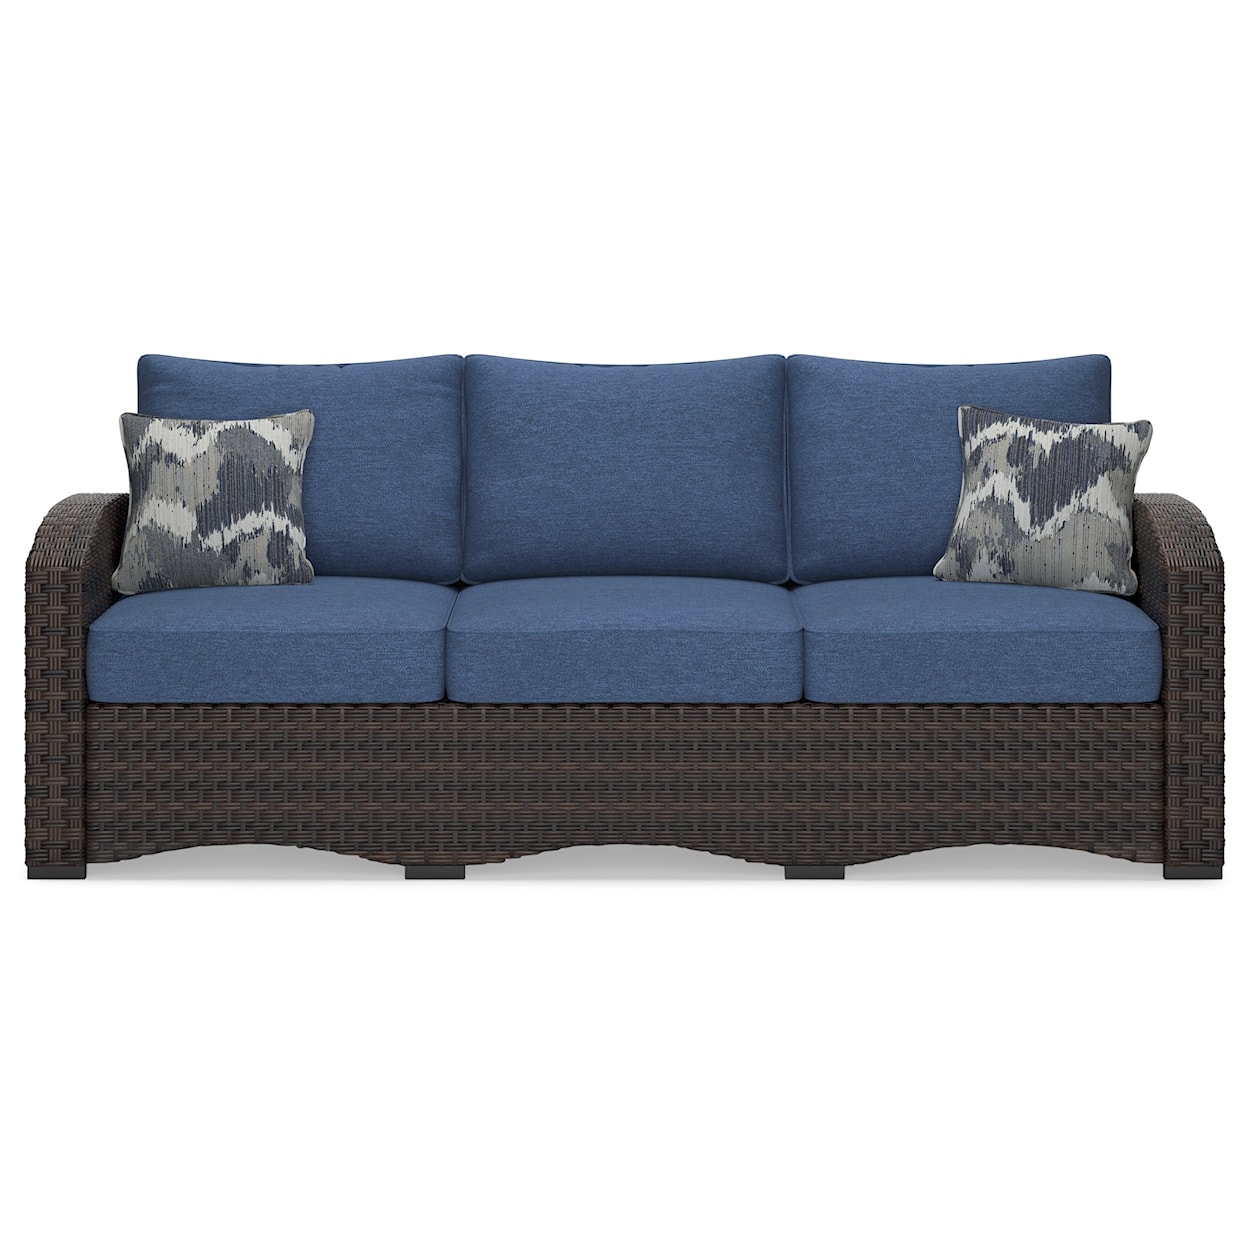 Ashley Furniture Signature Design Windglow Outdoor Sofa With Cushion